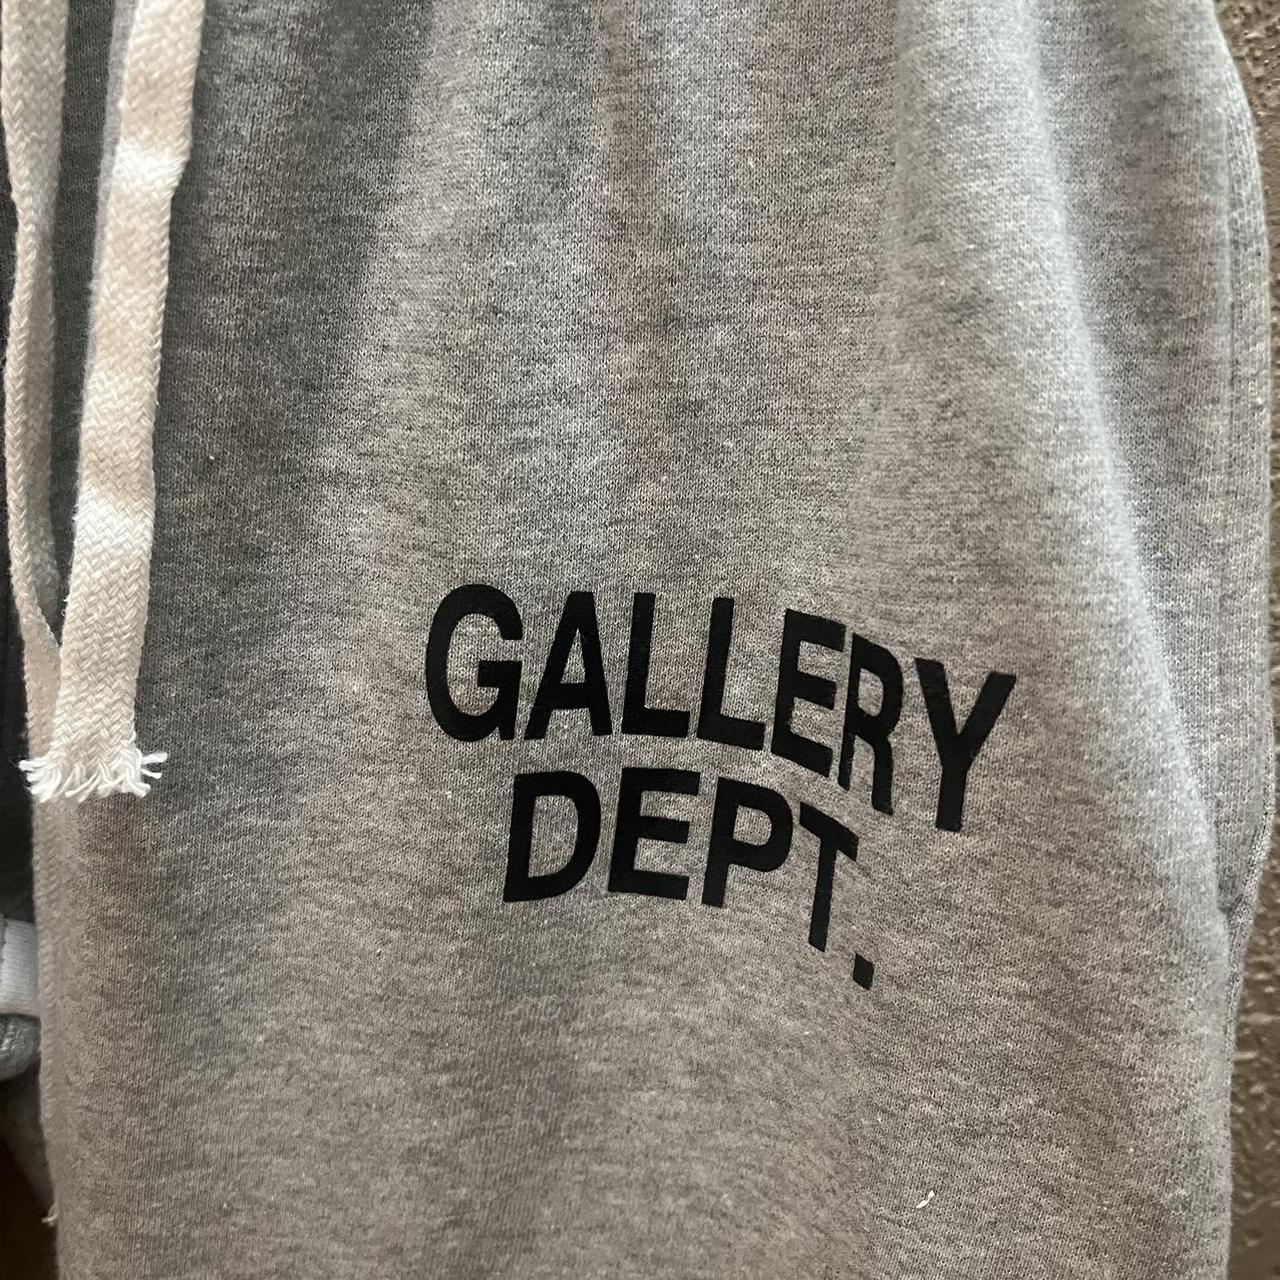 Gallery Dept sweats size xl - Depop